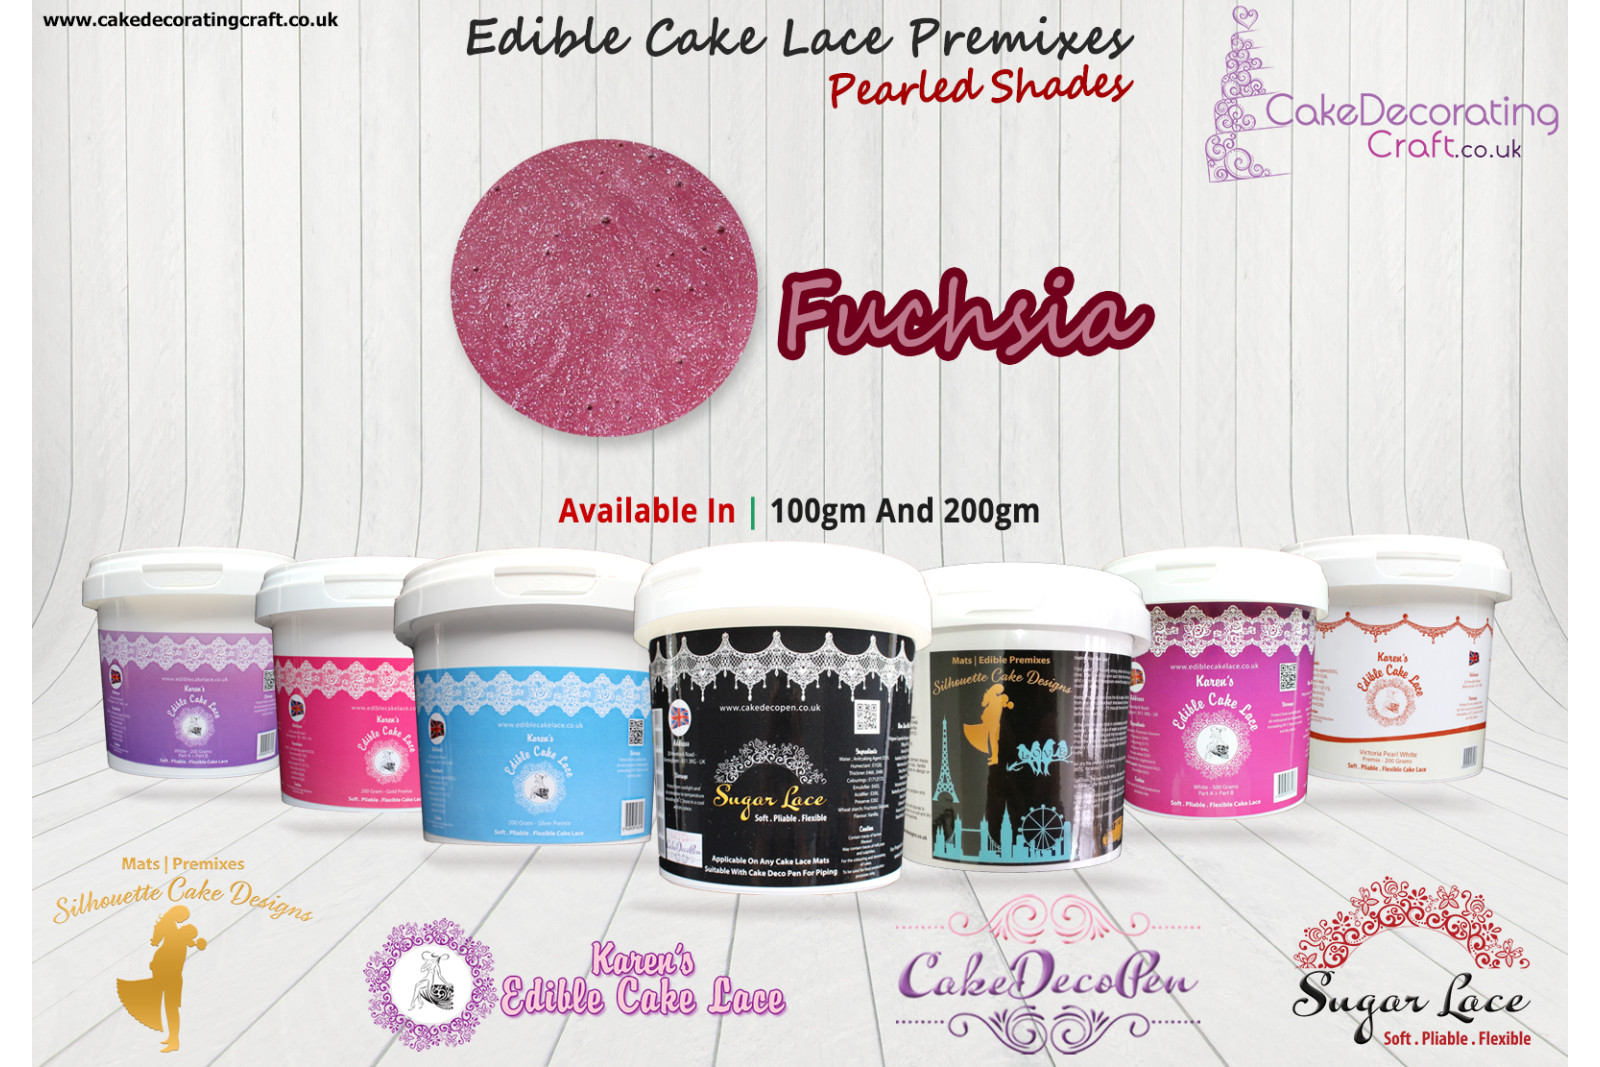 Fuchsia Colour | Silhouette Cake Design Premixes | Pearled Shade | 200 Grams